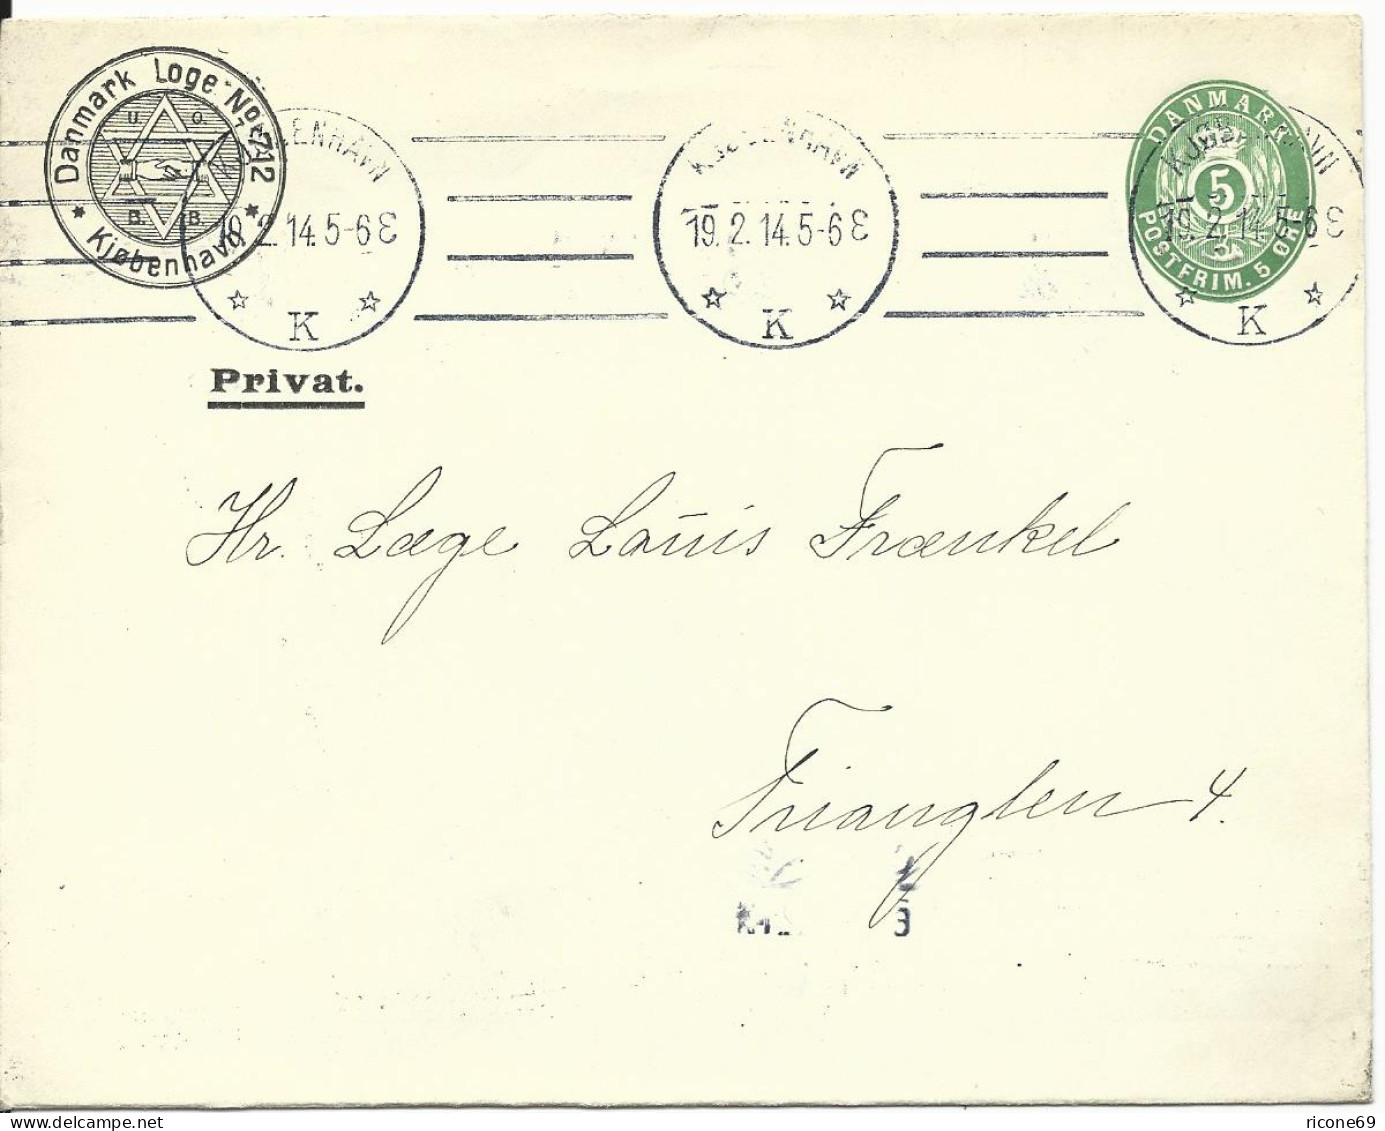 Dänemark 1914, 5 öre Ganzsache Brief M. Danmark Loge No.712 Judaika Zudruck - Judaika, Judentum